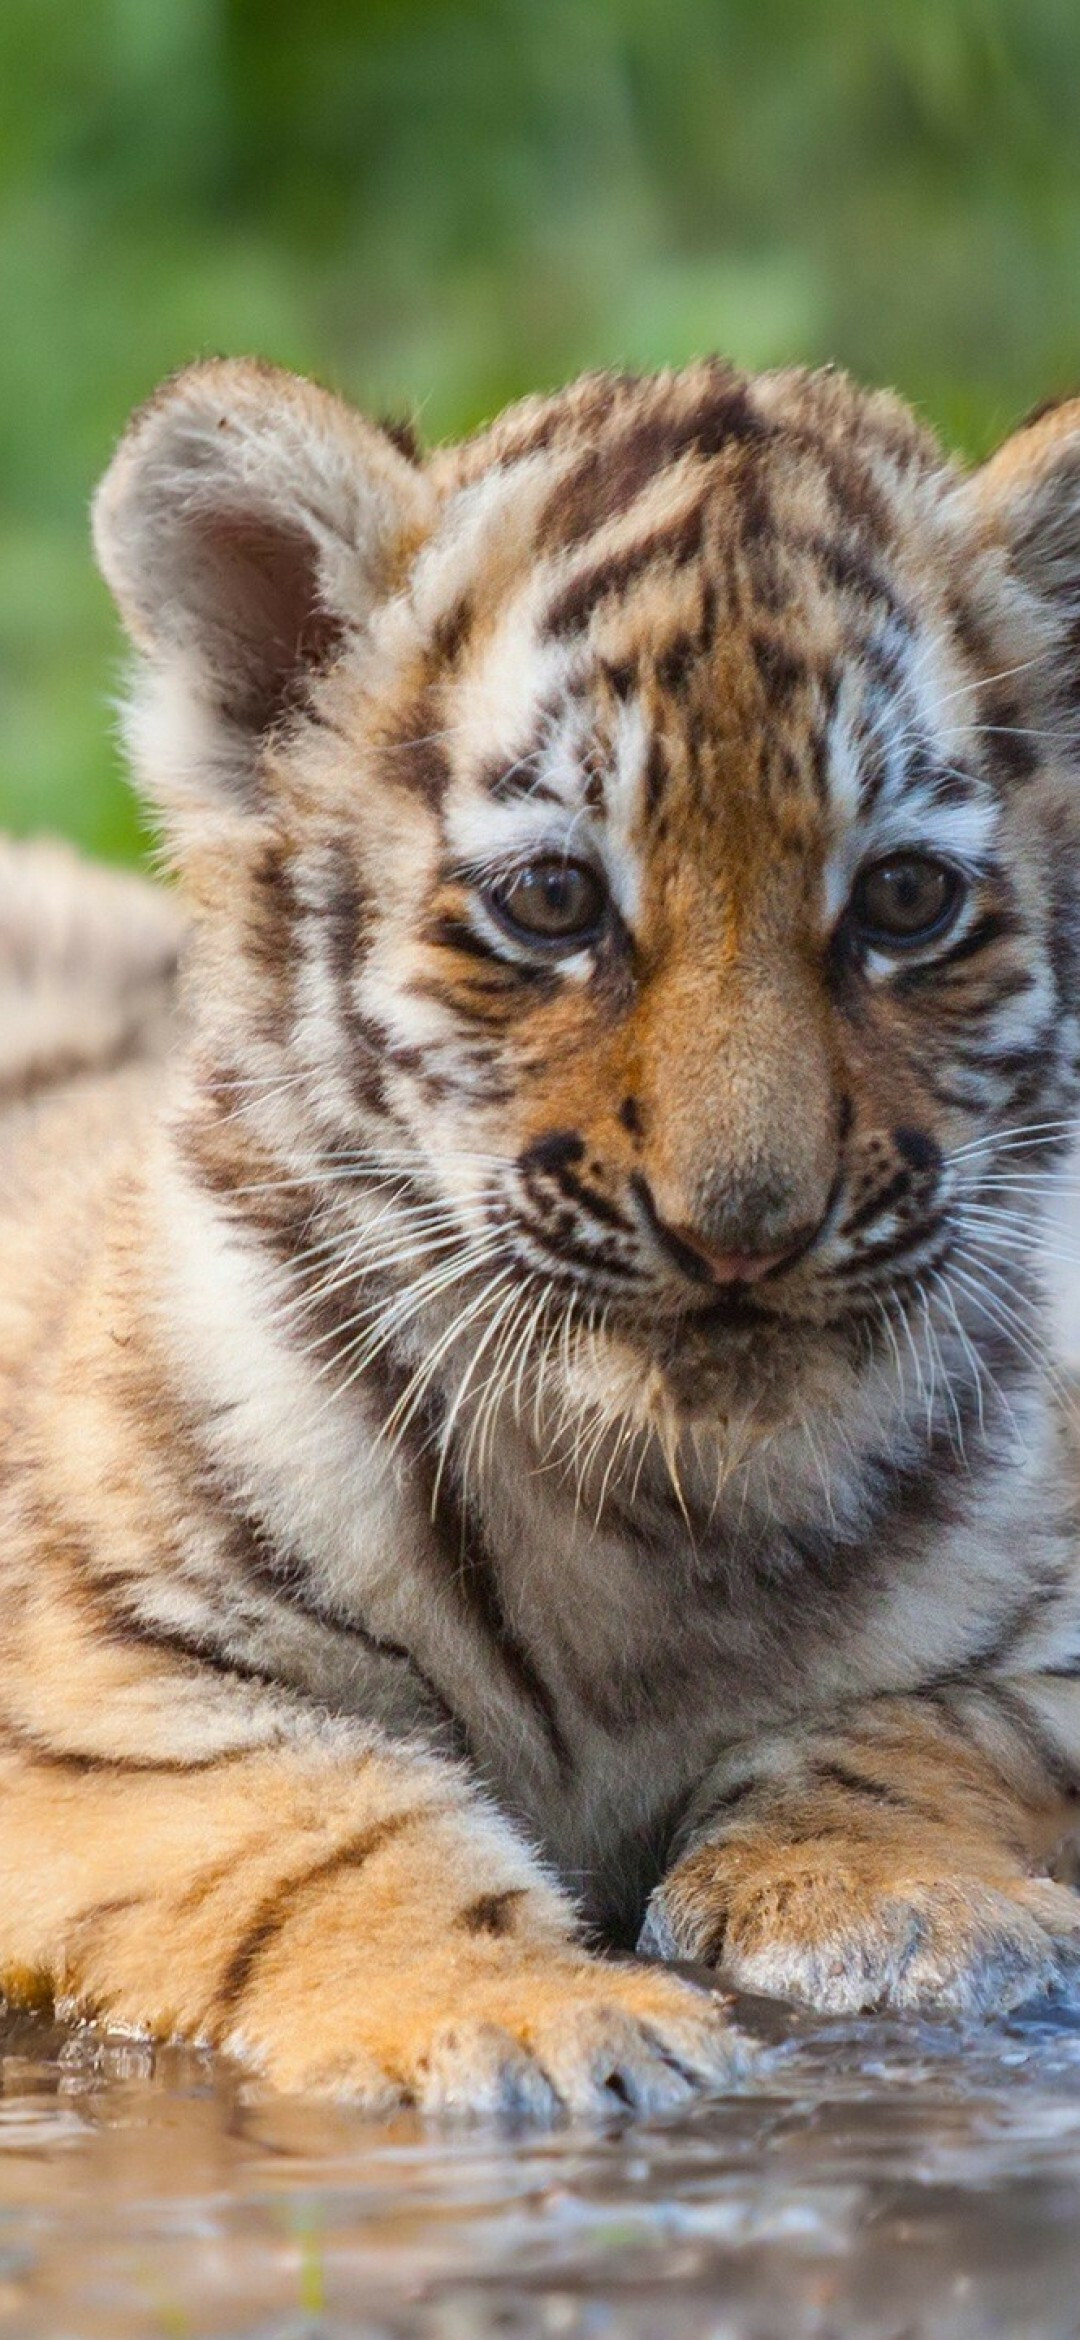 Tiger Cub: Cute animal with stripes, Predator, Big cats babies. 1080x2340 HD Background.